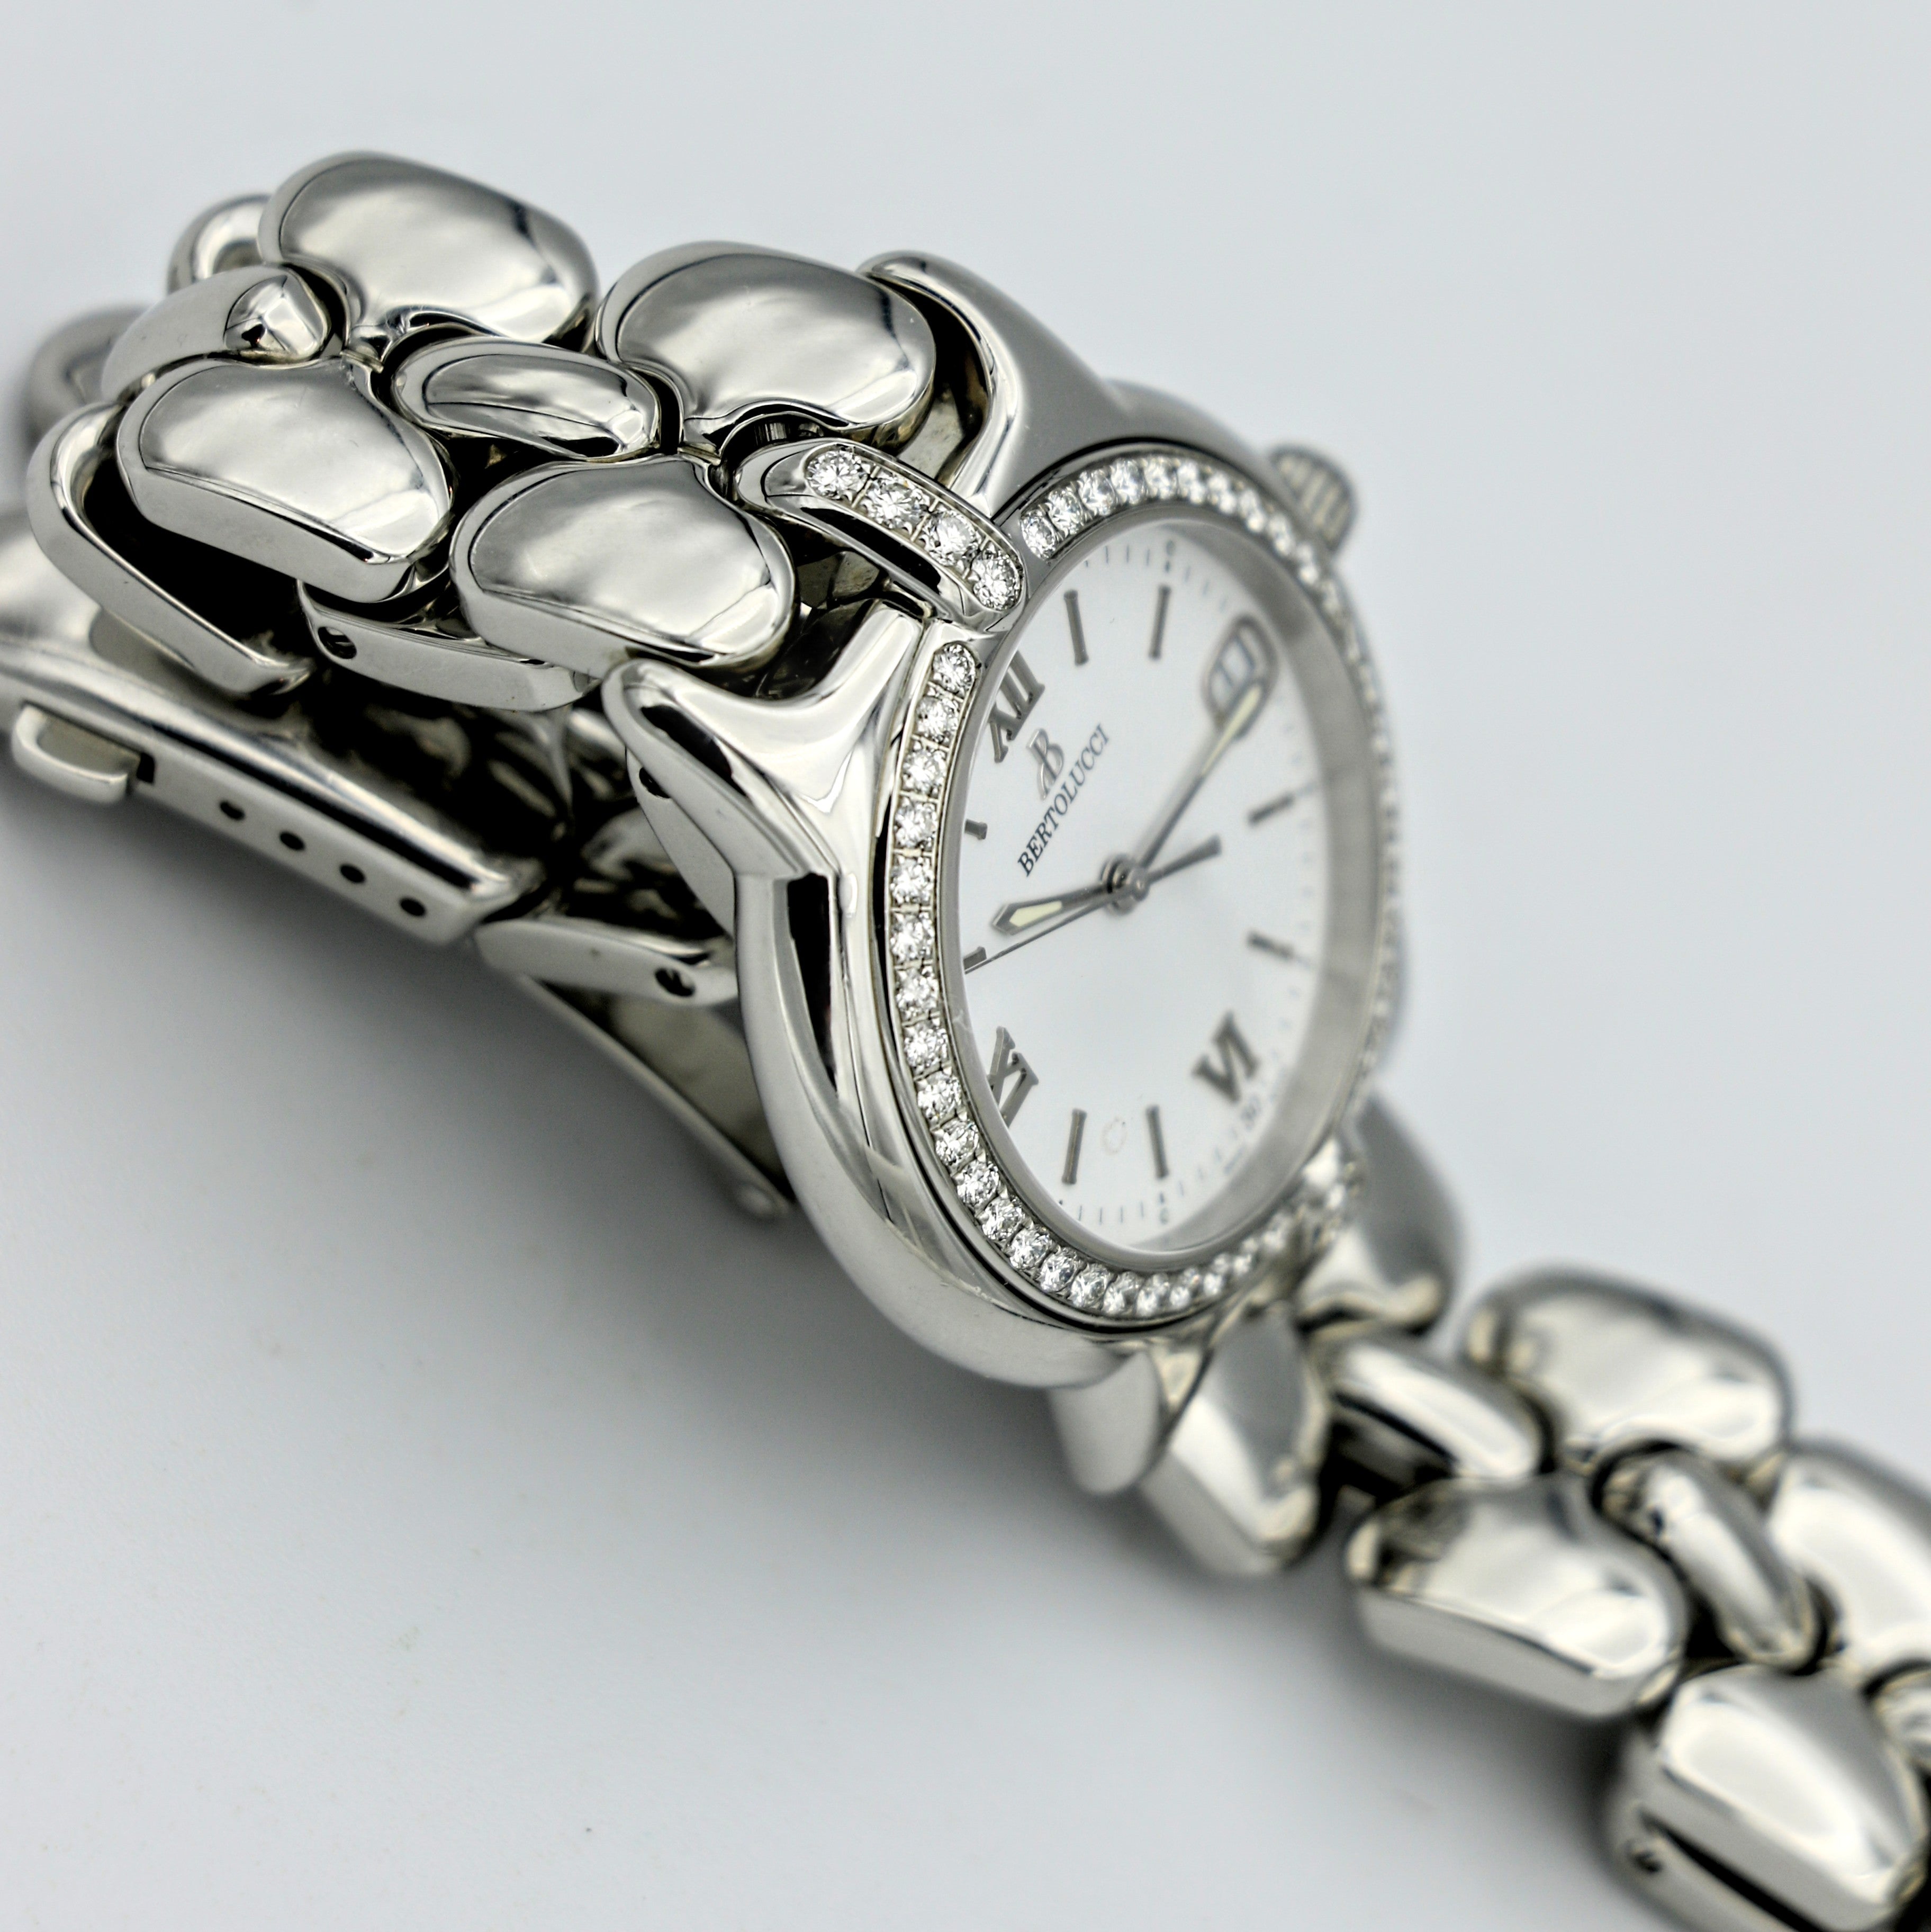 BERTOLUCCI Vir Watch Diamond Bezel 35mm S.S. Wristwatch